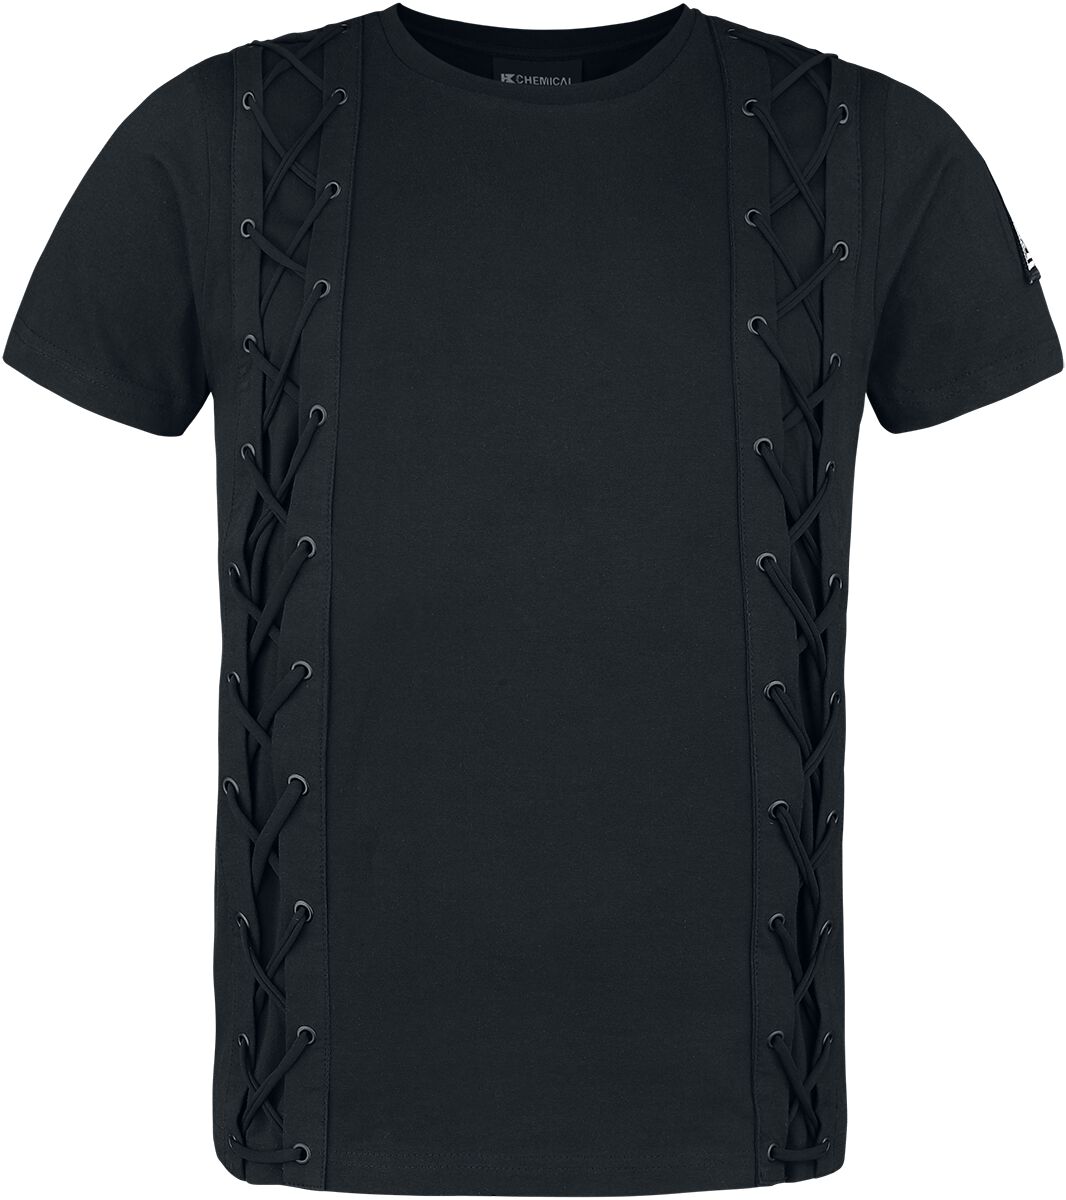 Image of T-Shirt Gothic di Chemical Black - Mens’ black Gunner top - S a 4XL - Uomo - nero